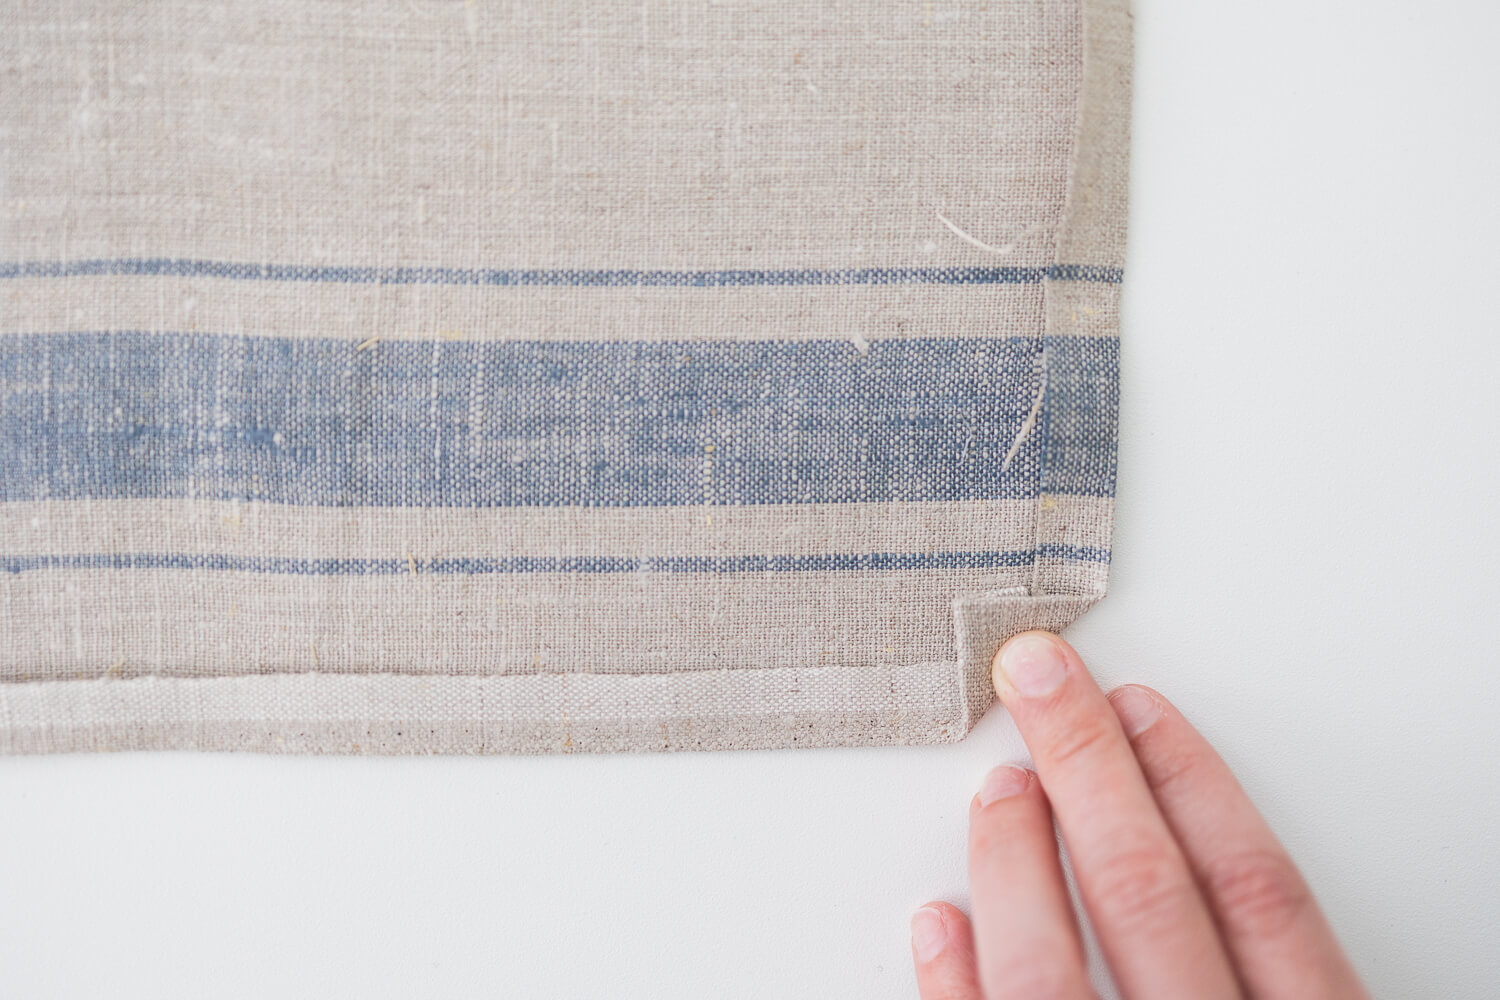 Tutorial: How To Make A Tea Towel Three Ways – the thread